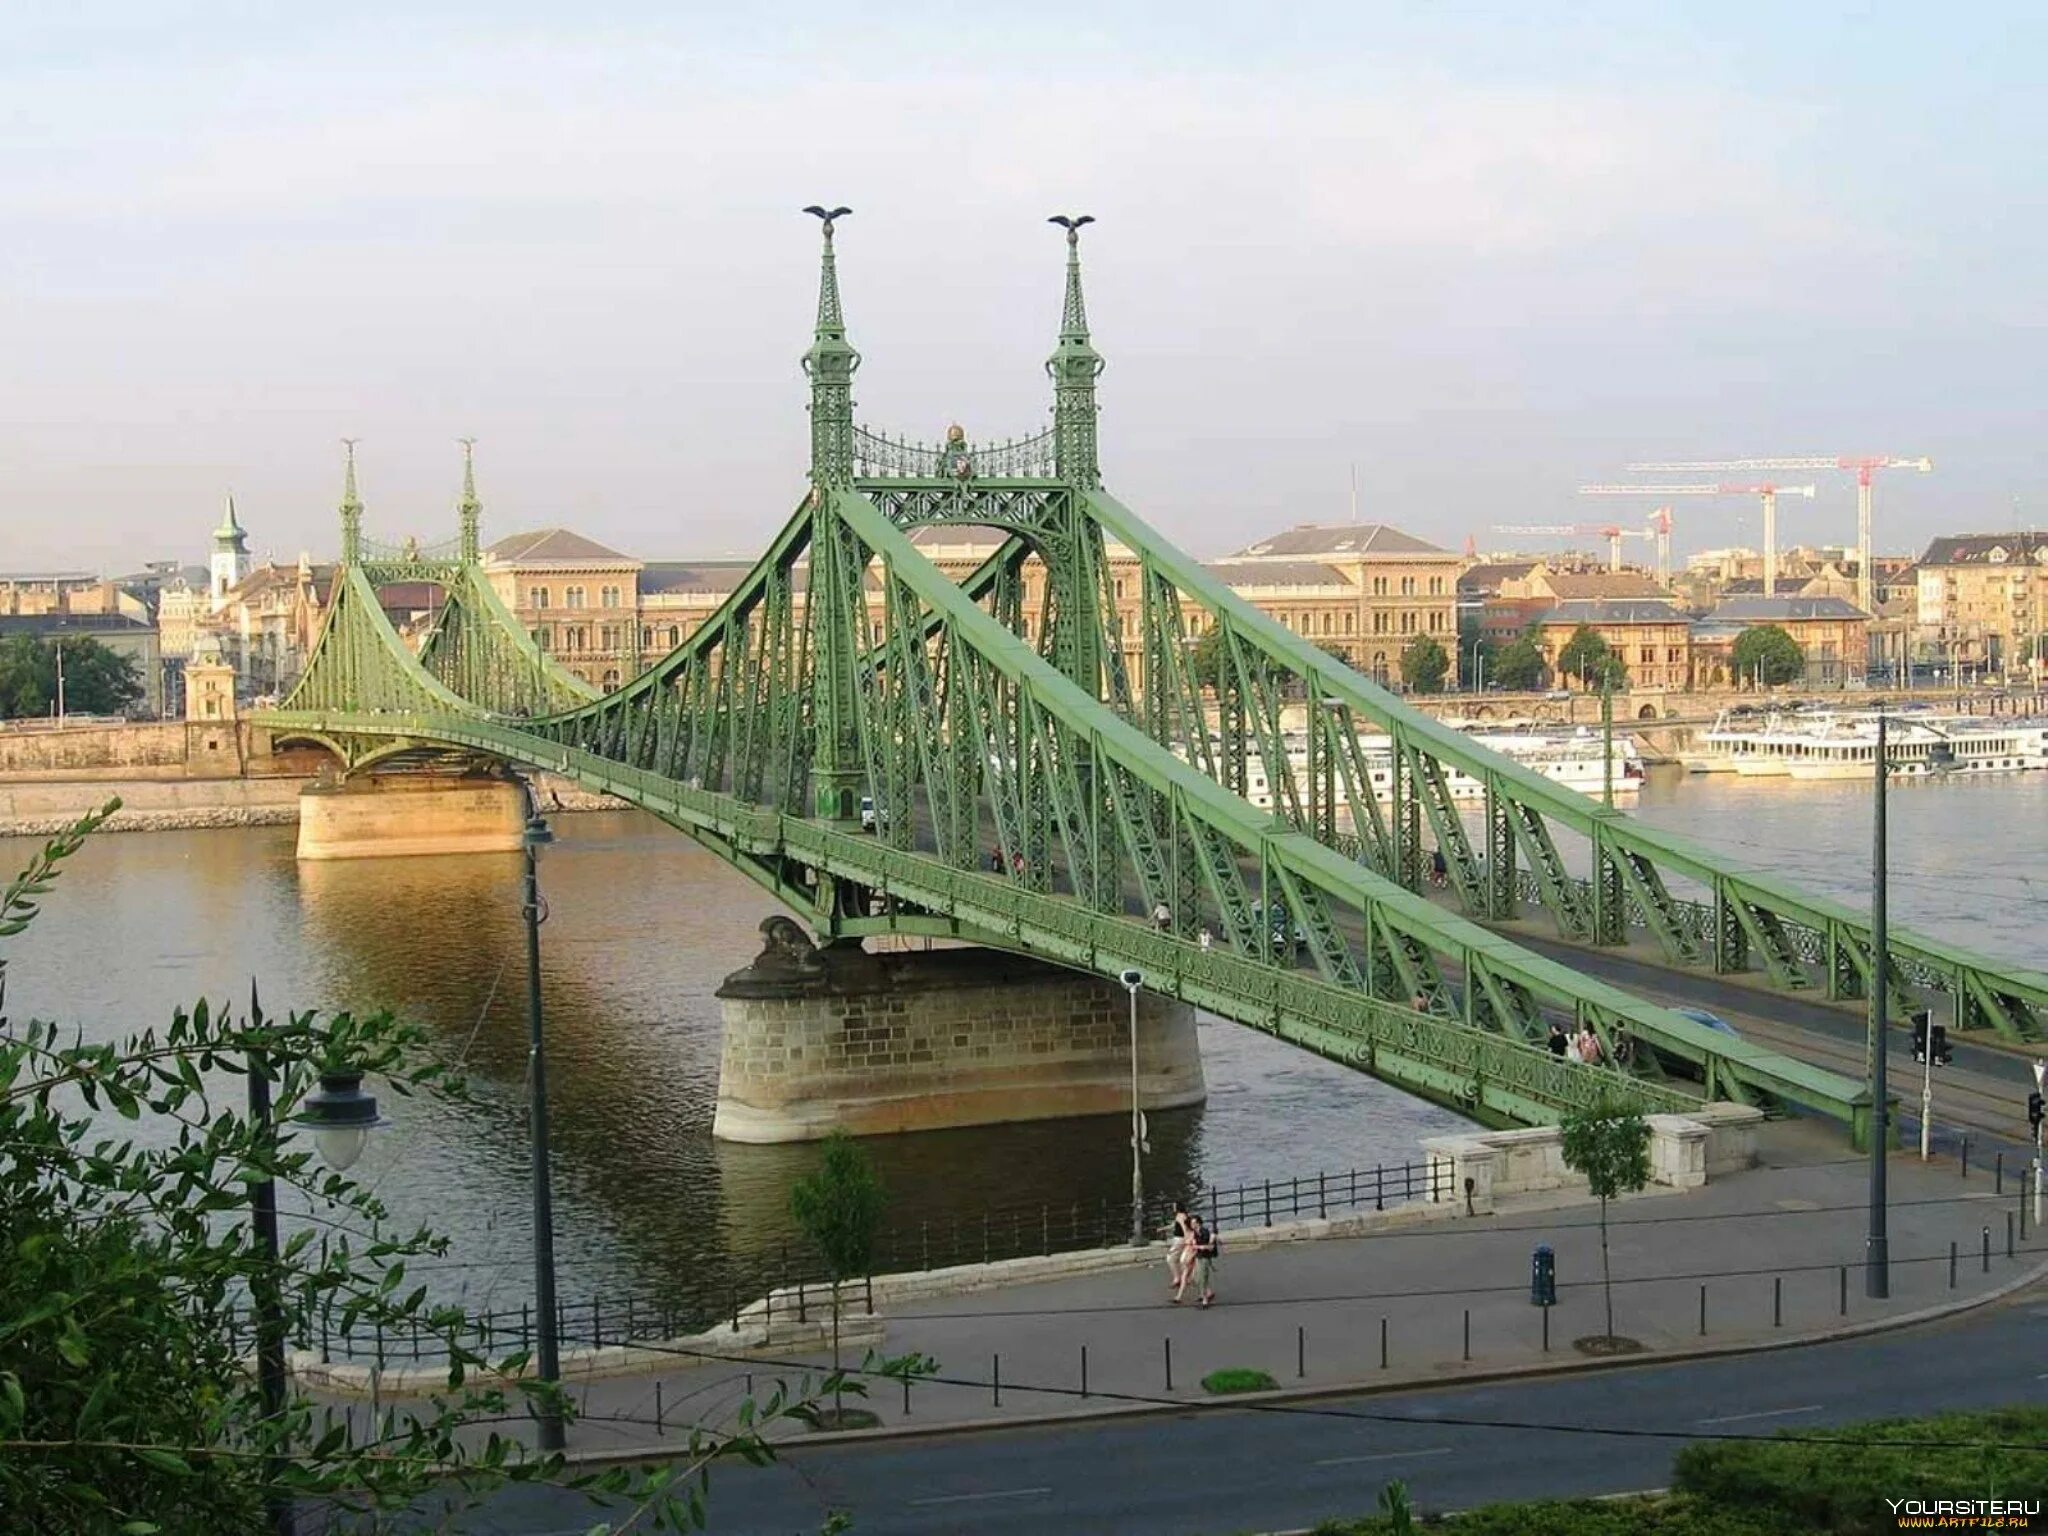 Будапешт мосты через Дунай. Будапешт. Мост свободы. Венгрия мост через Дунай. Мост Эржебет Будапешт. Most org ru